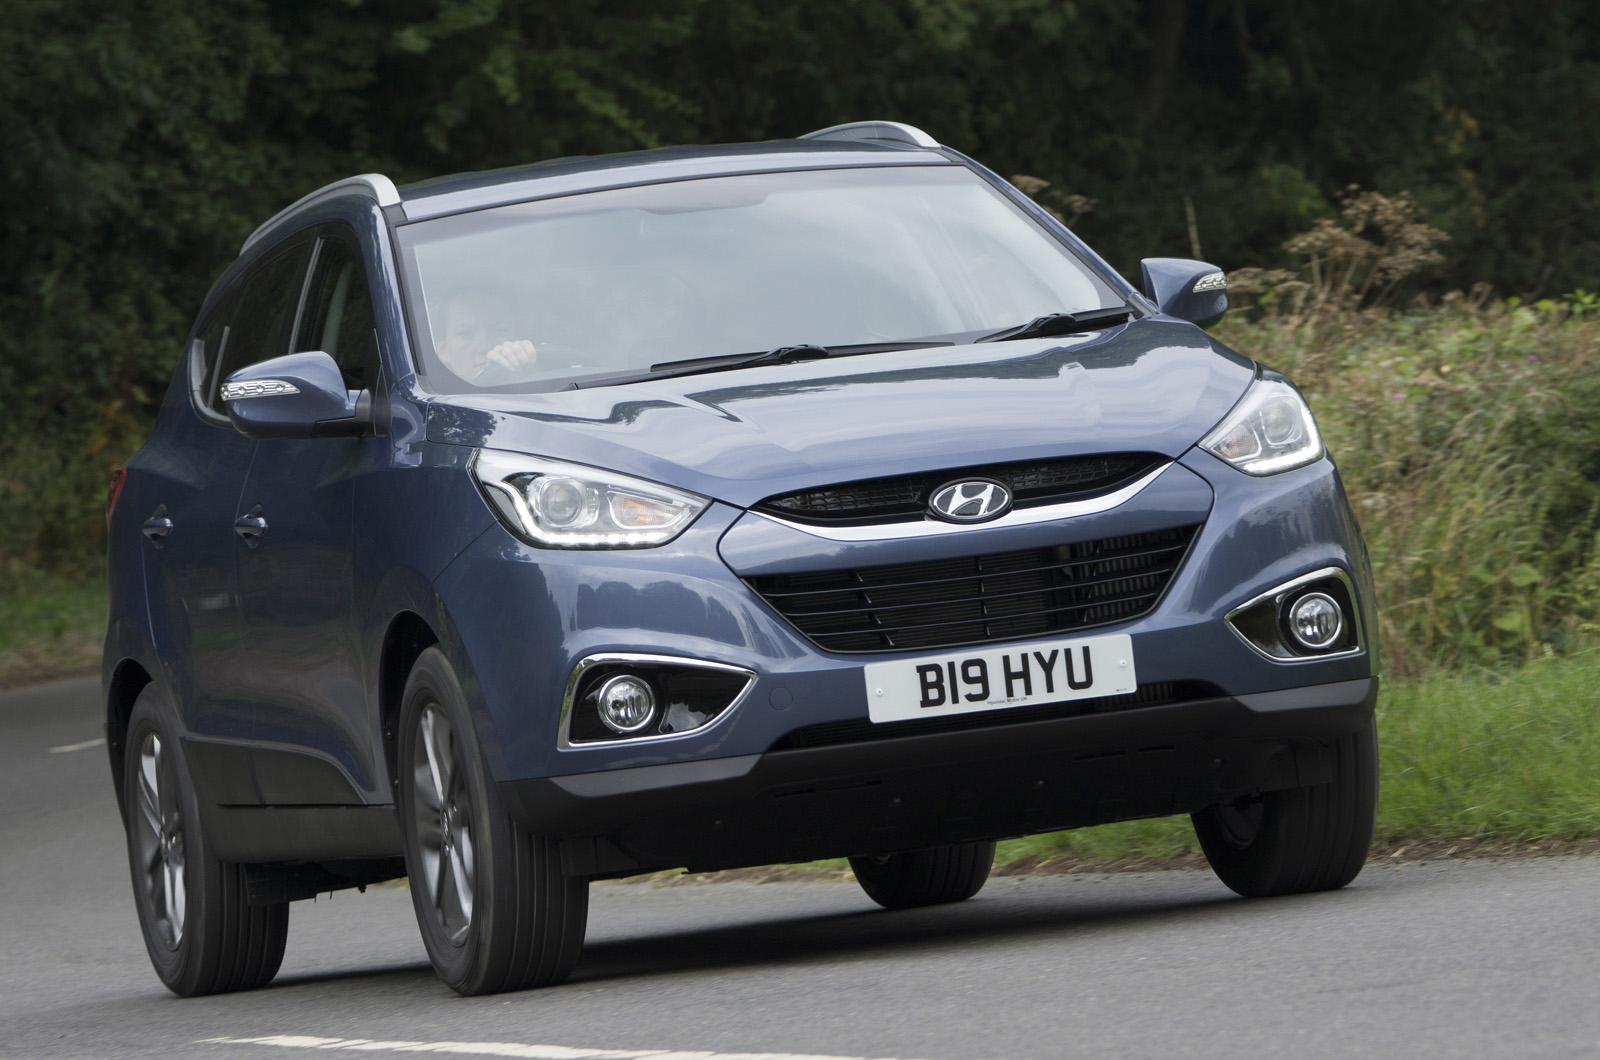 2014 Hyundai ix35 Review - Drive